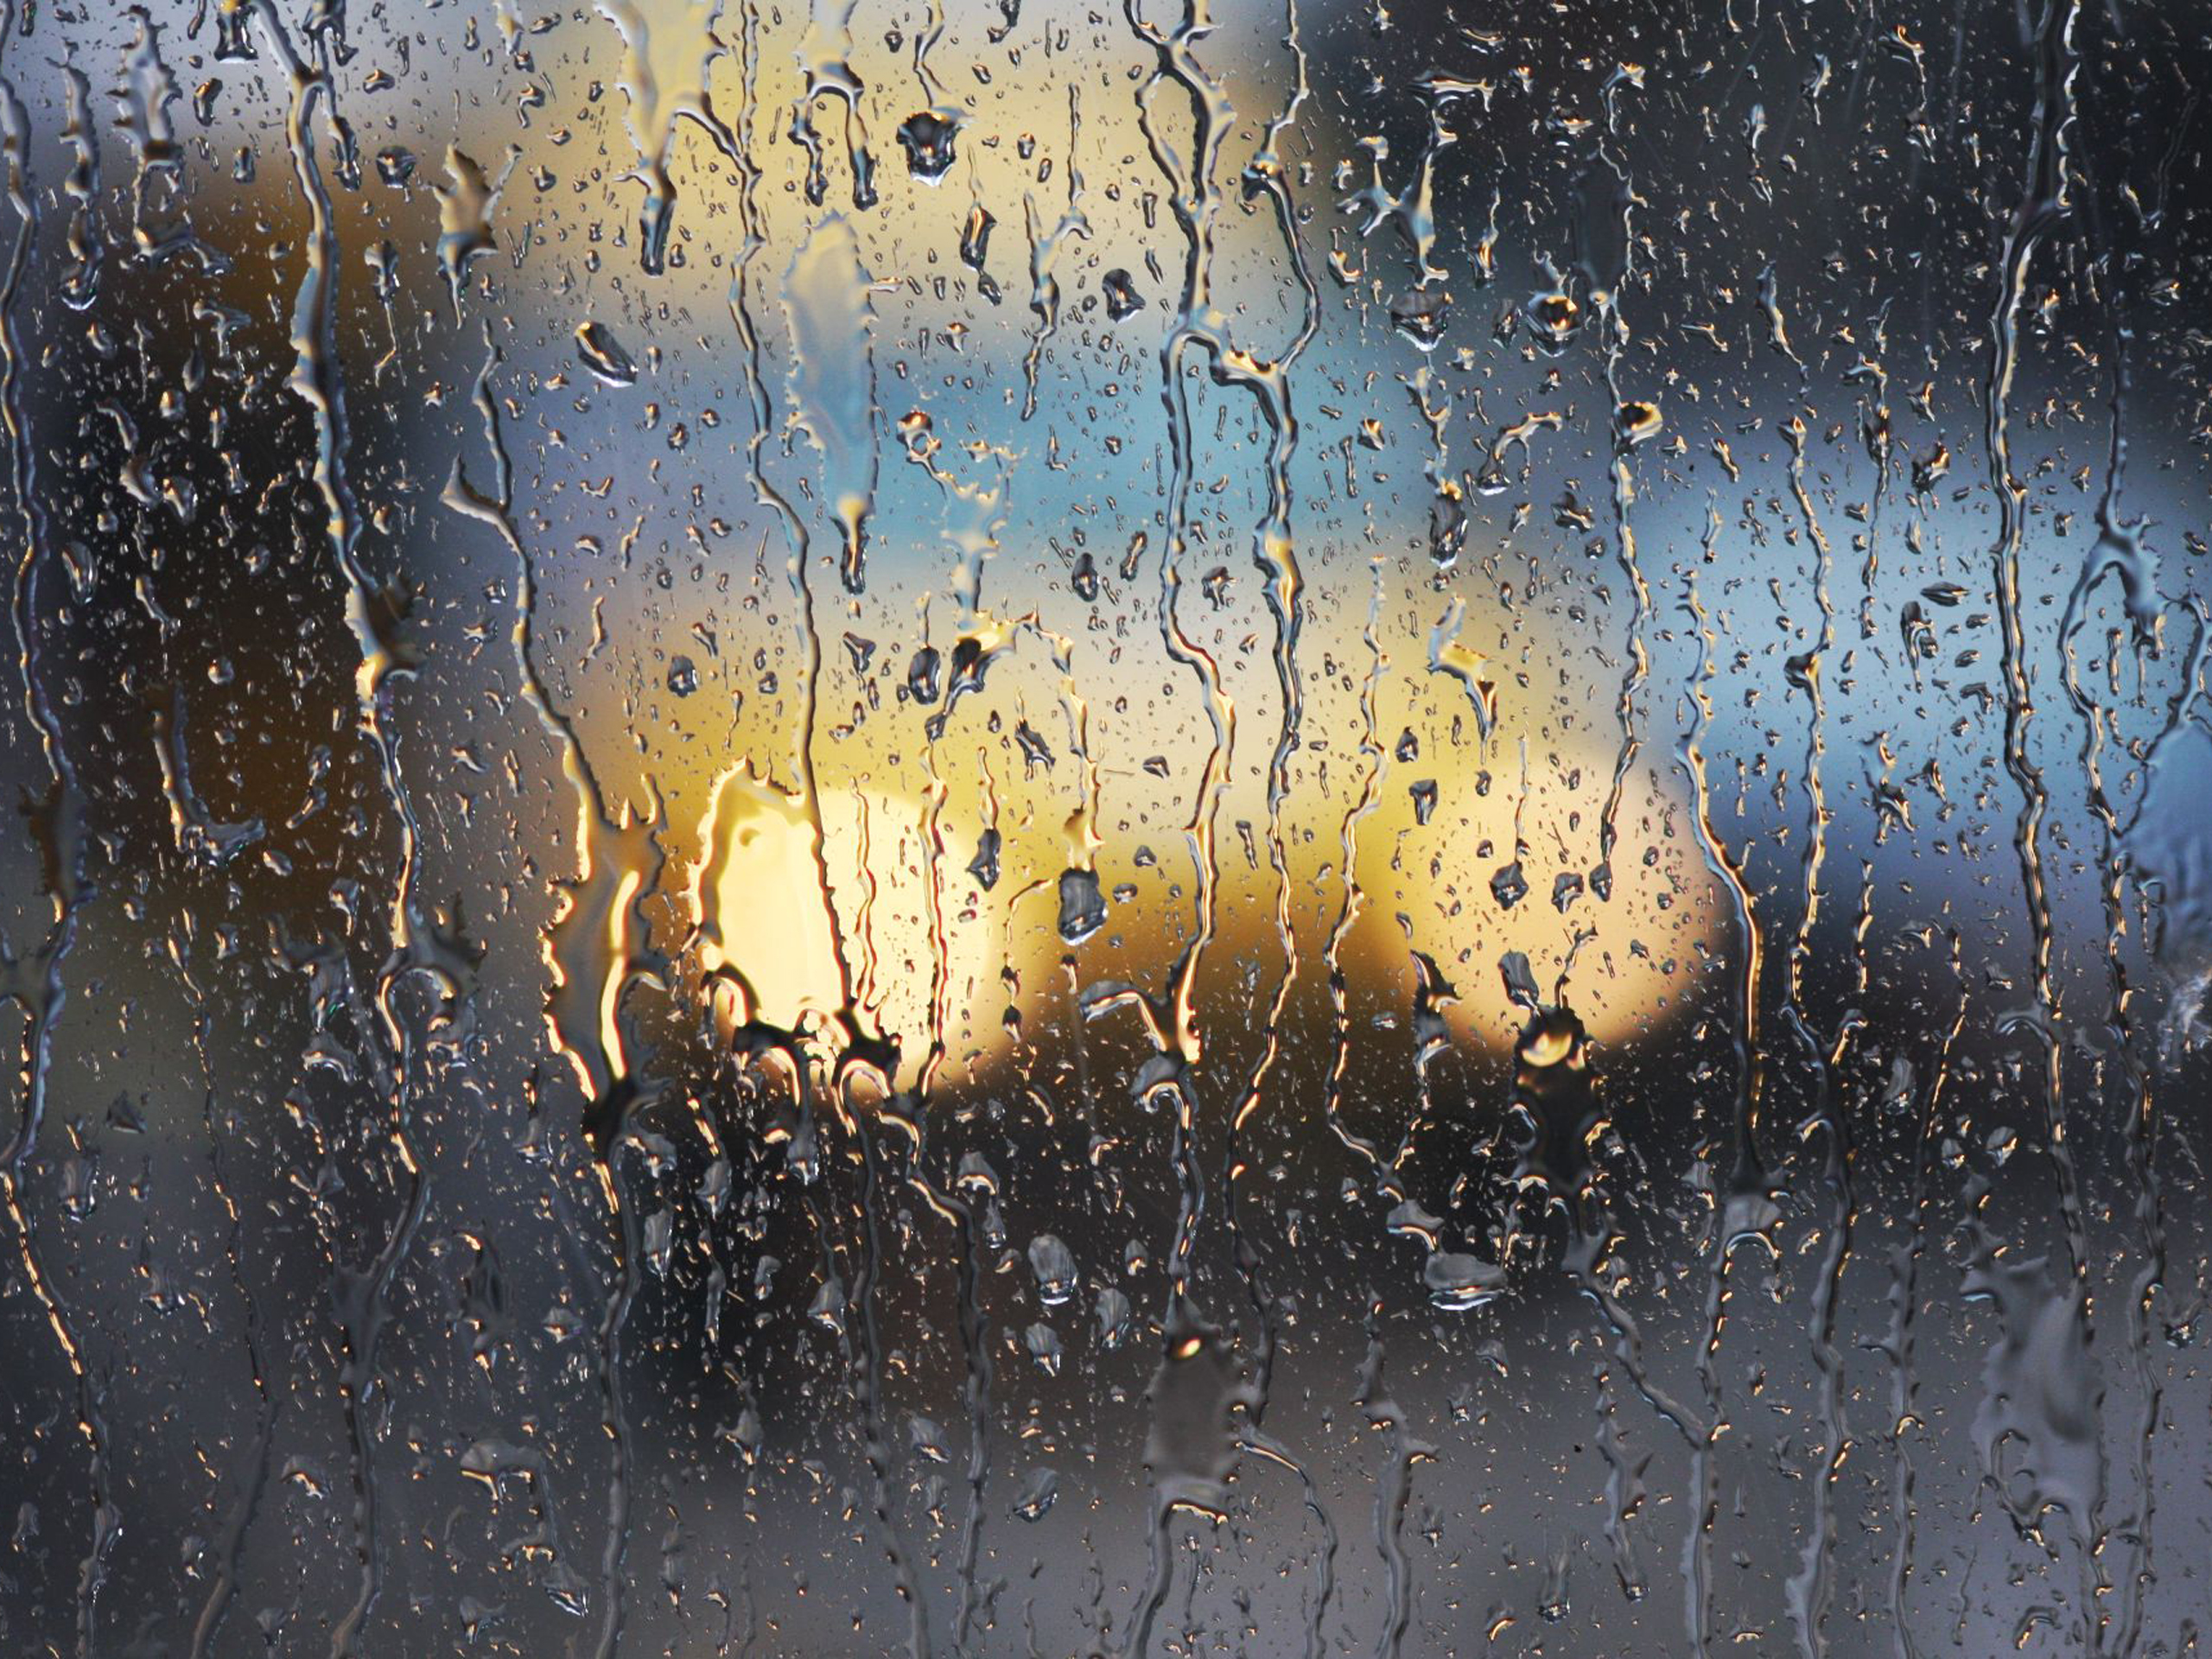 Обои на телефон окно. Капли на стекле. Капли дождя на стекле. Дождевые капли на стекле. Обои дождь.